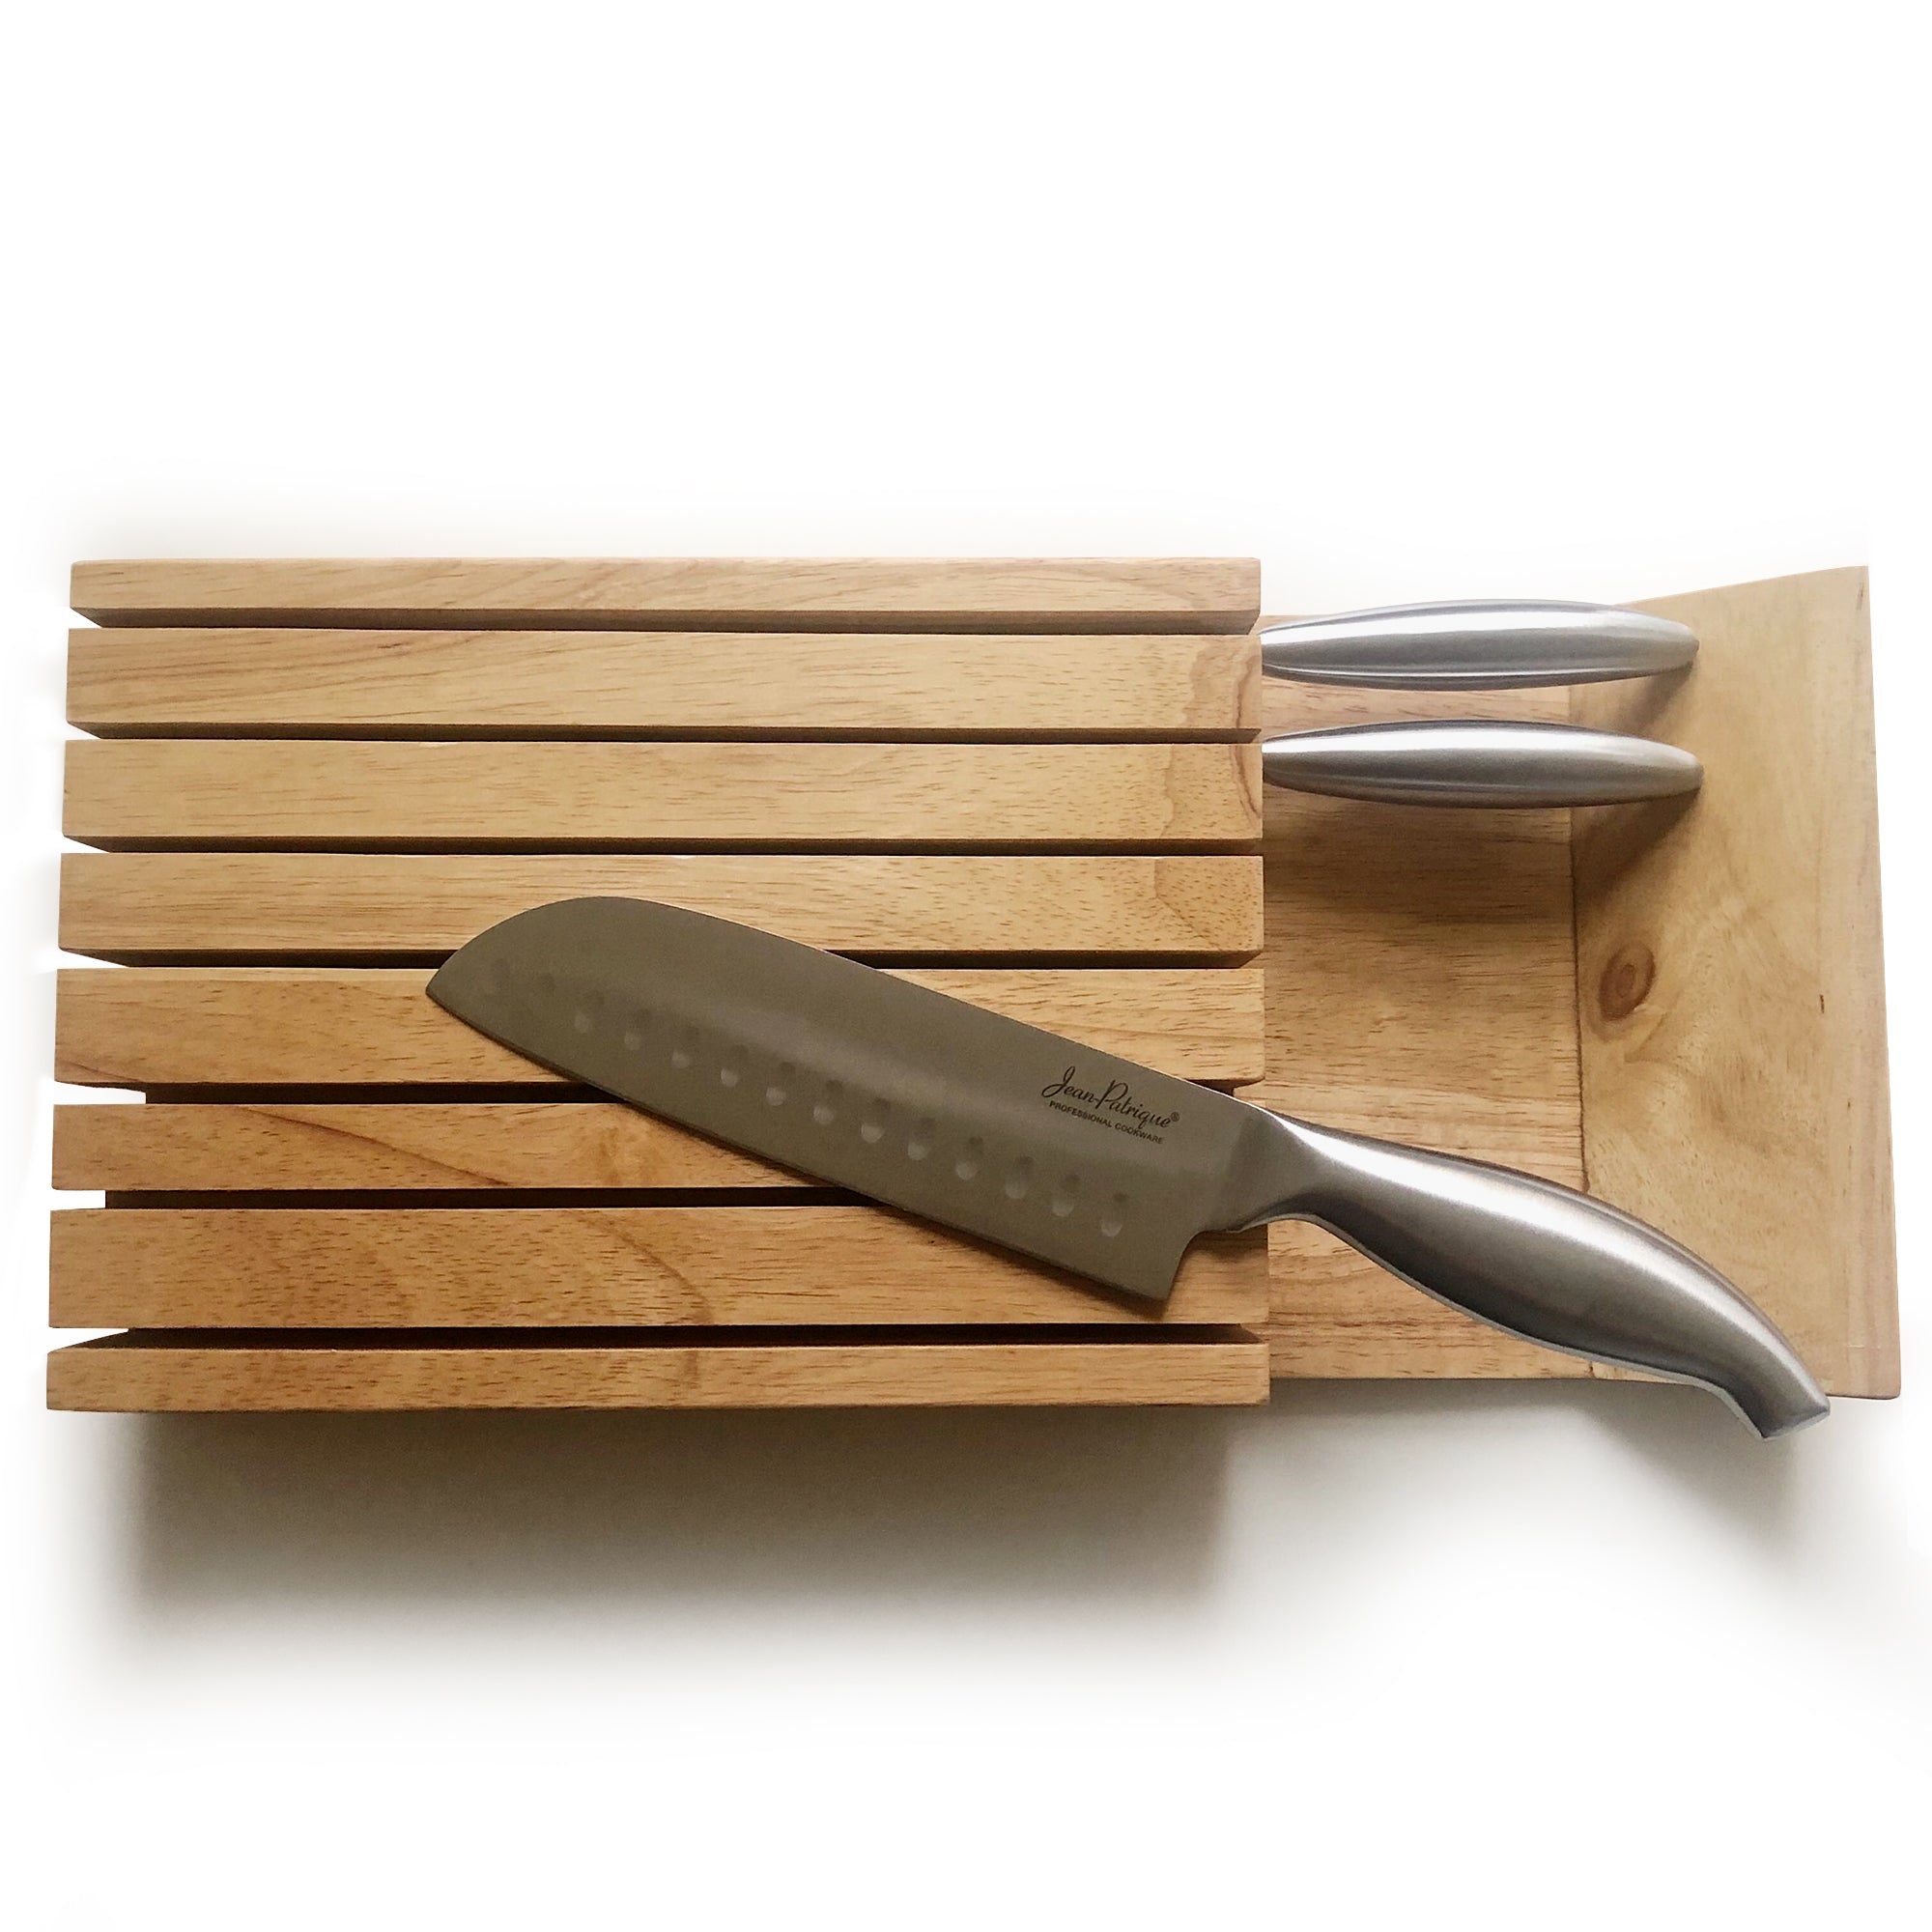 Making an in-drawer knife block 